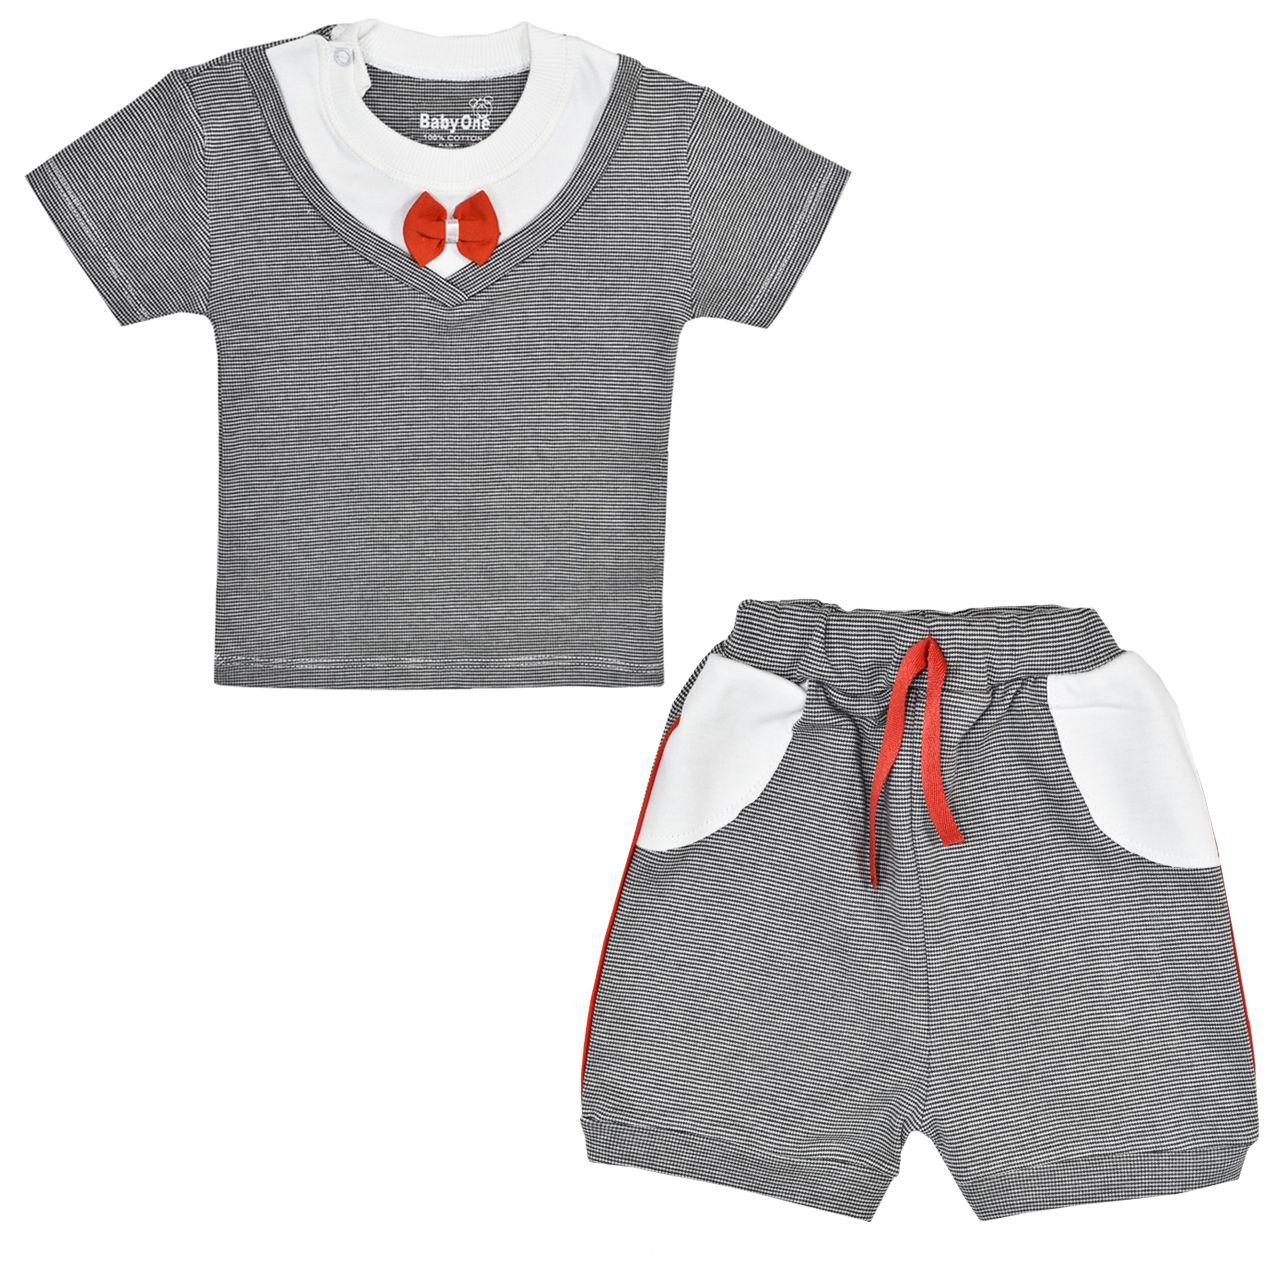 ست تی شرت و شلوارک نوزادی بی بی وان مدل پاپیون کد 1 -  - 1